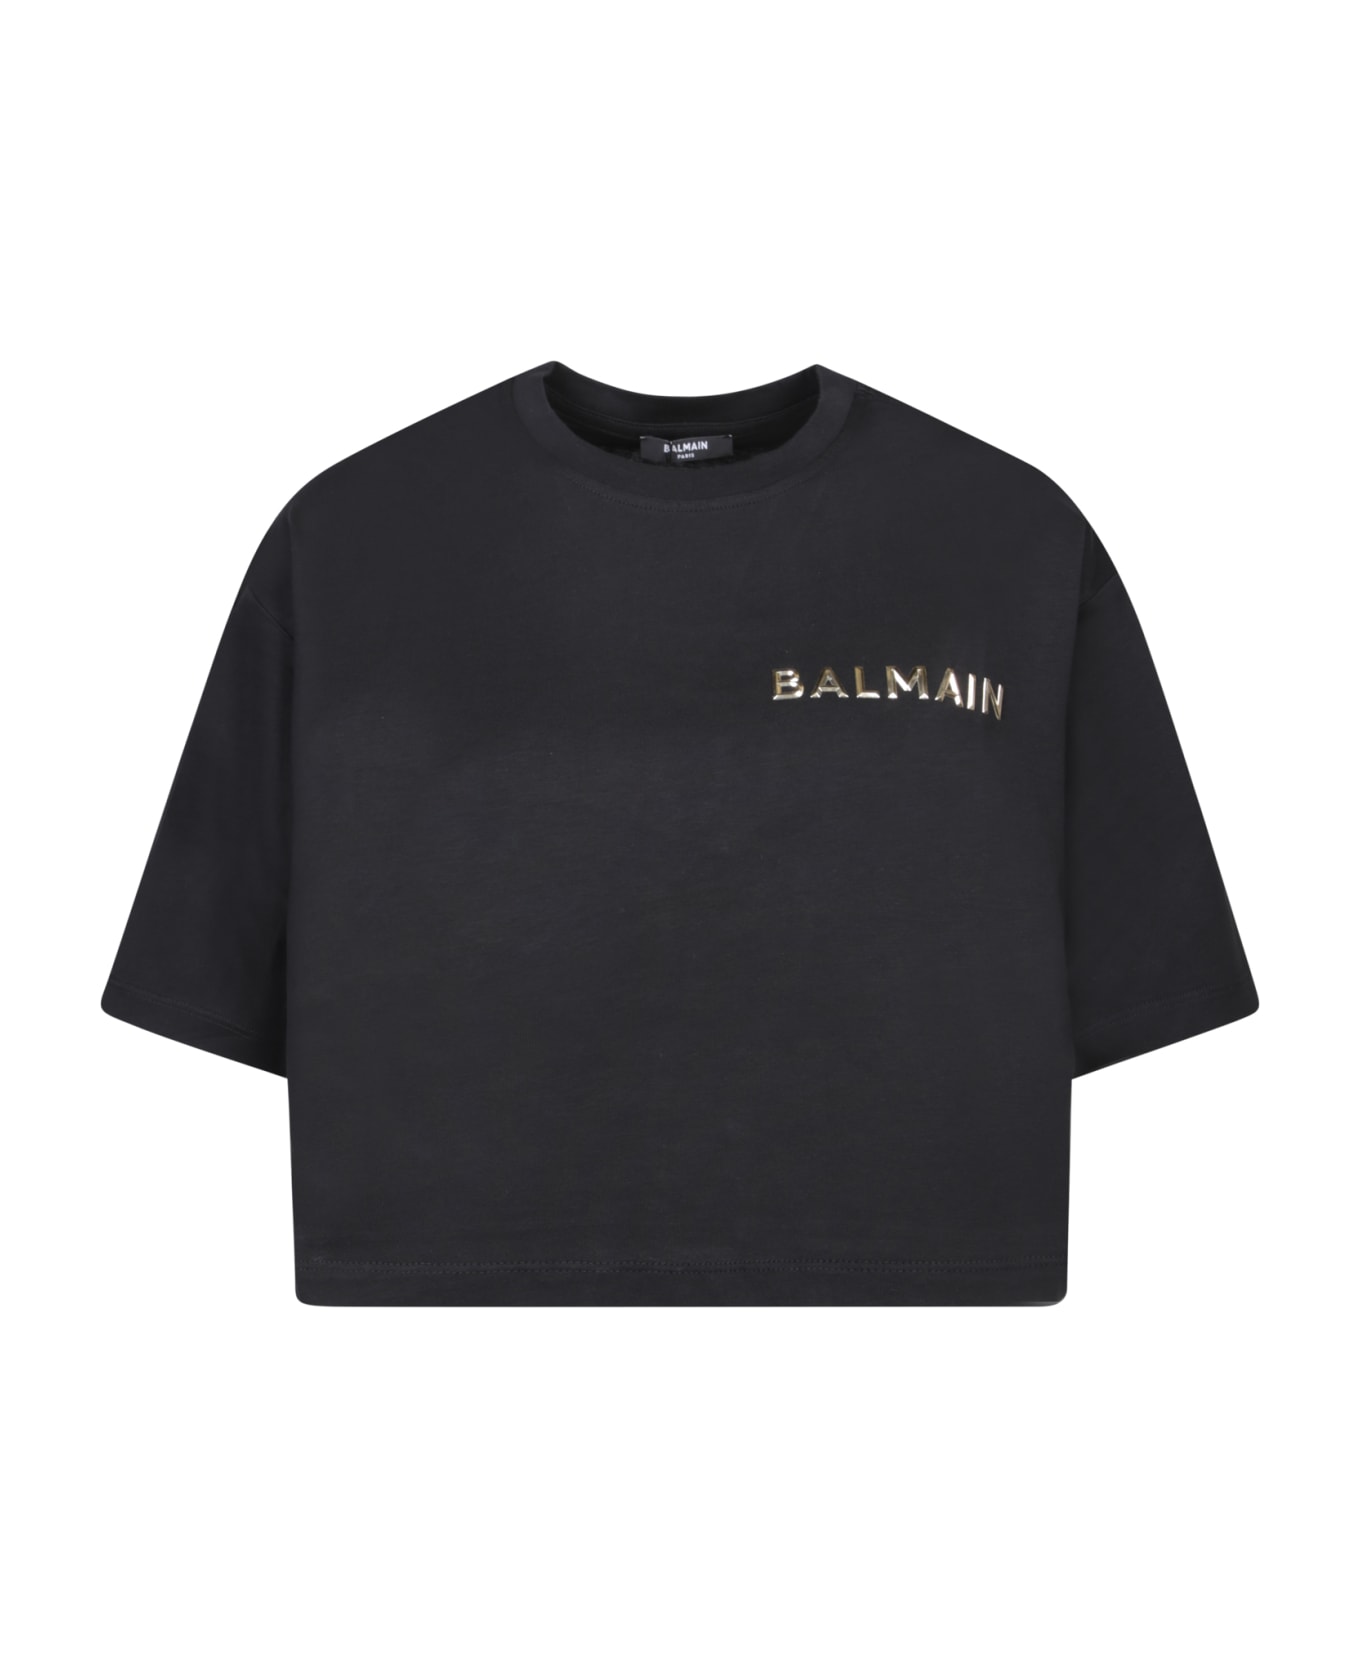 Balmain Black Cropped Logo T-shirt - Black